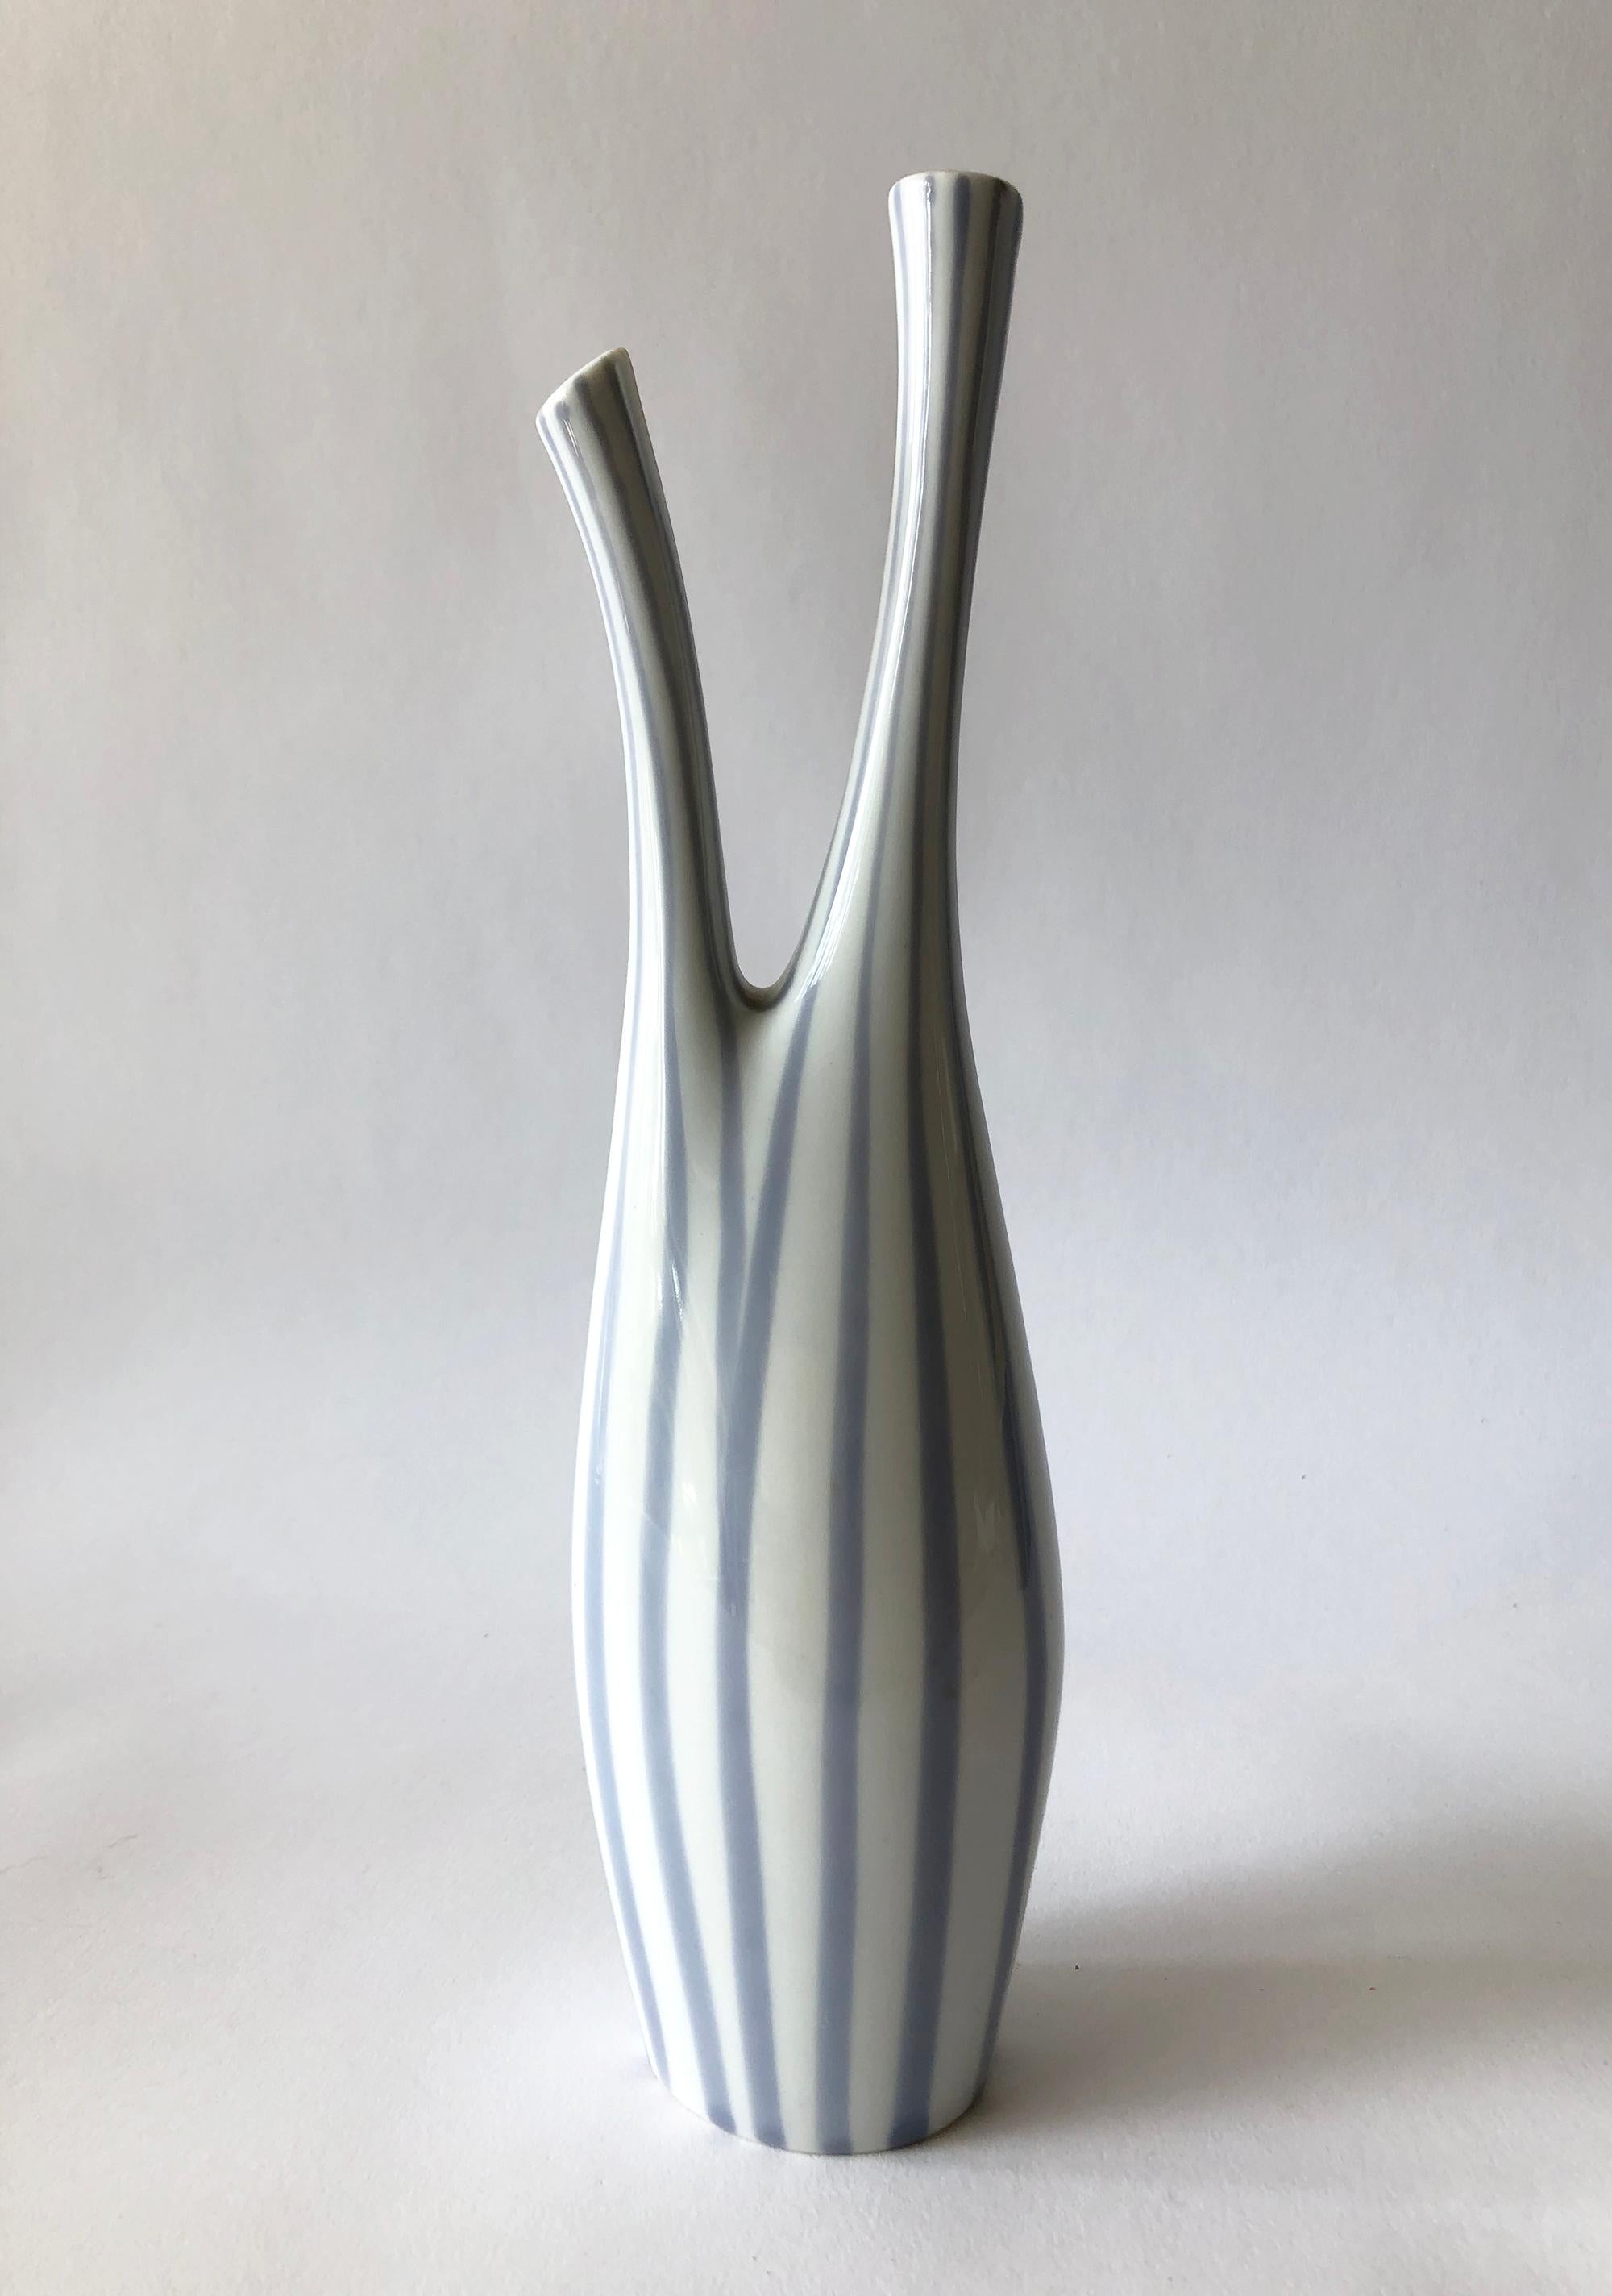 Double spouted Mid-Century Modern porcelain vase created by Royal Dux of Czechoslovakia. Vase measures 9